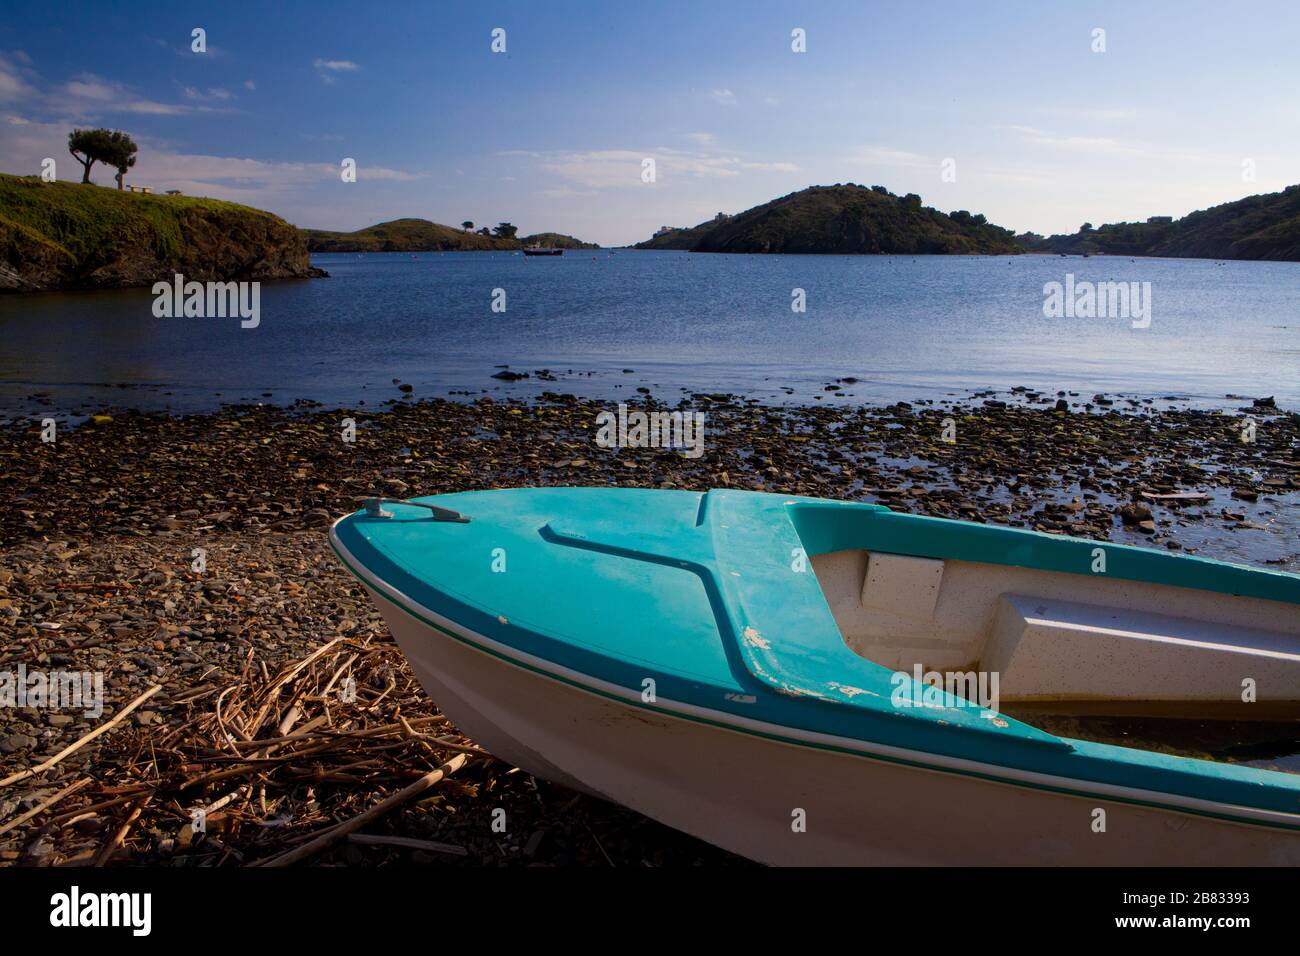 A boat standing on the shore of Port Lligat village in Costa Brava, Girona, Spain. Stock Photo